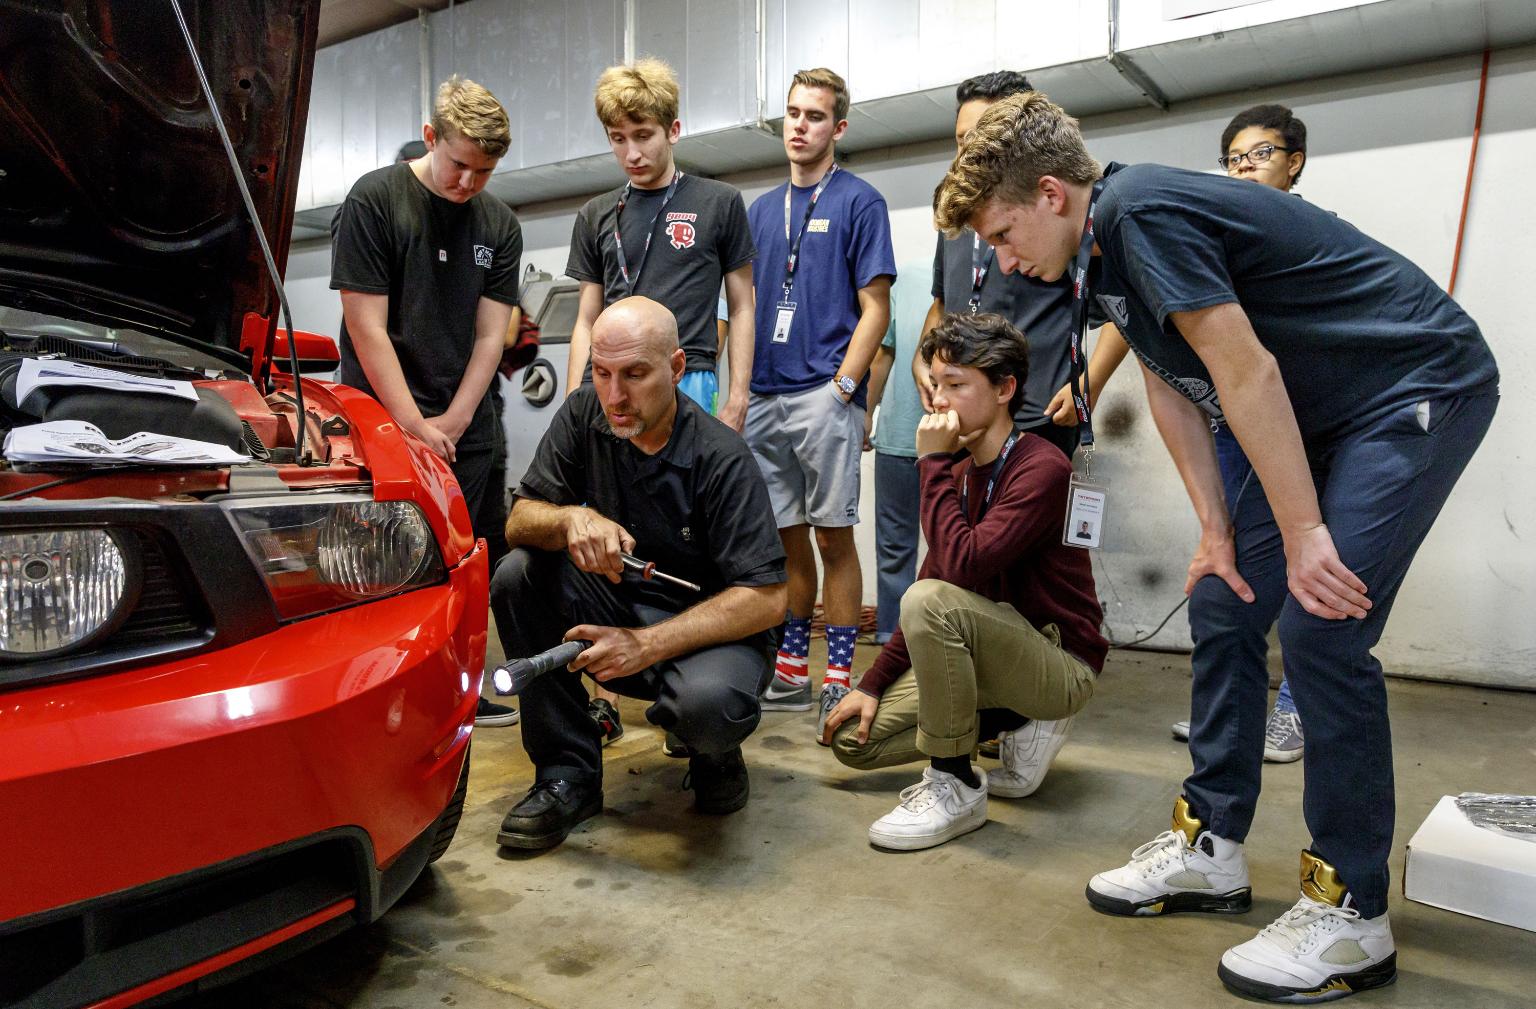 Teen Auto Workshop participants gather around to watch an in-progress repair.